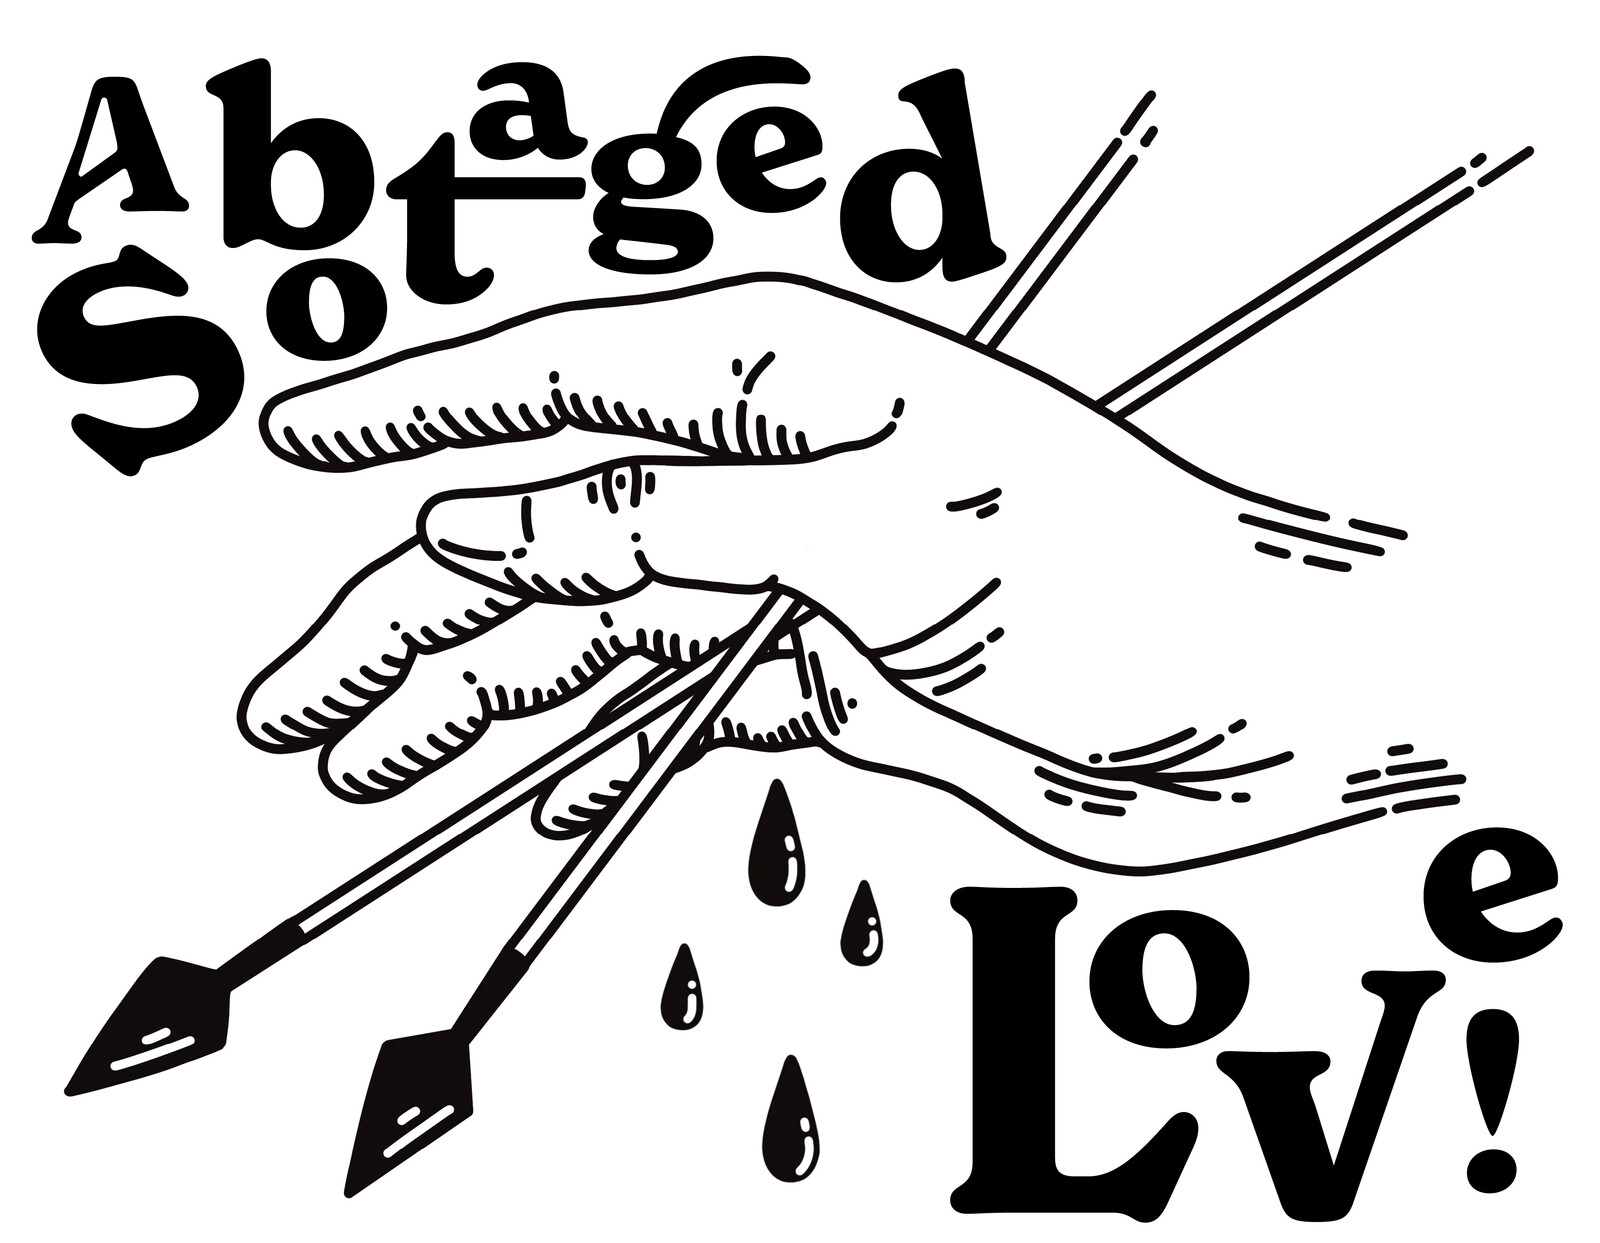 Sabotaged Love
Type thumbnail 2

Adobe Illustrator
Procreate